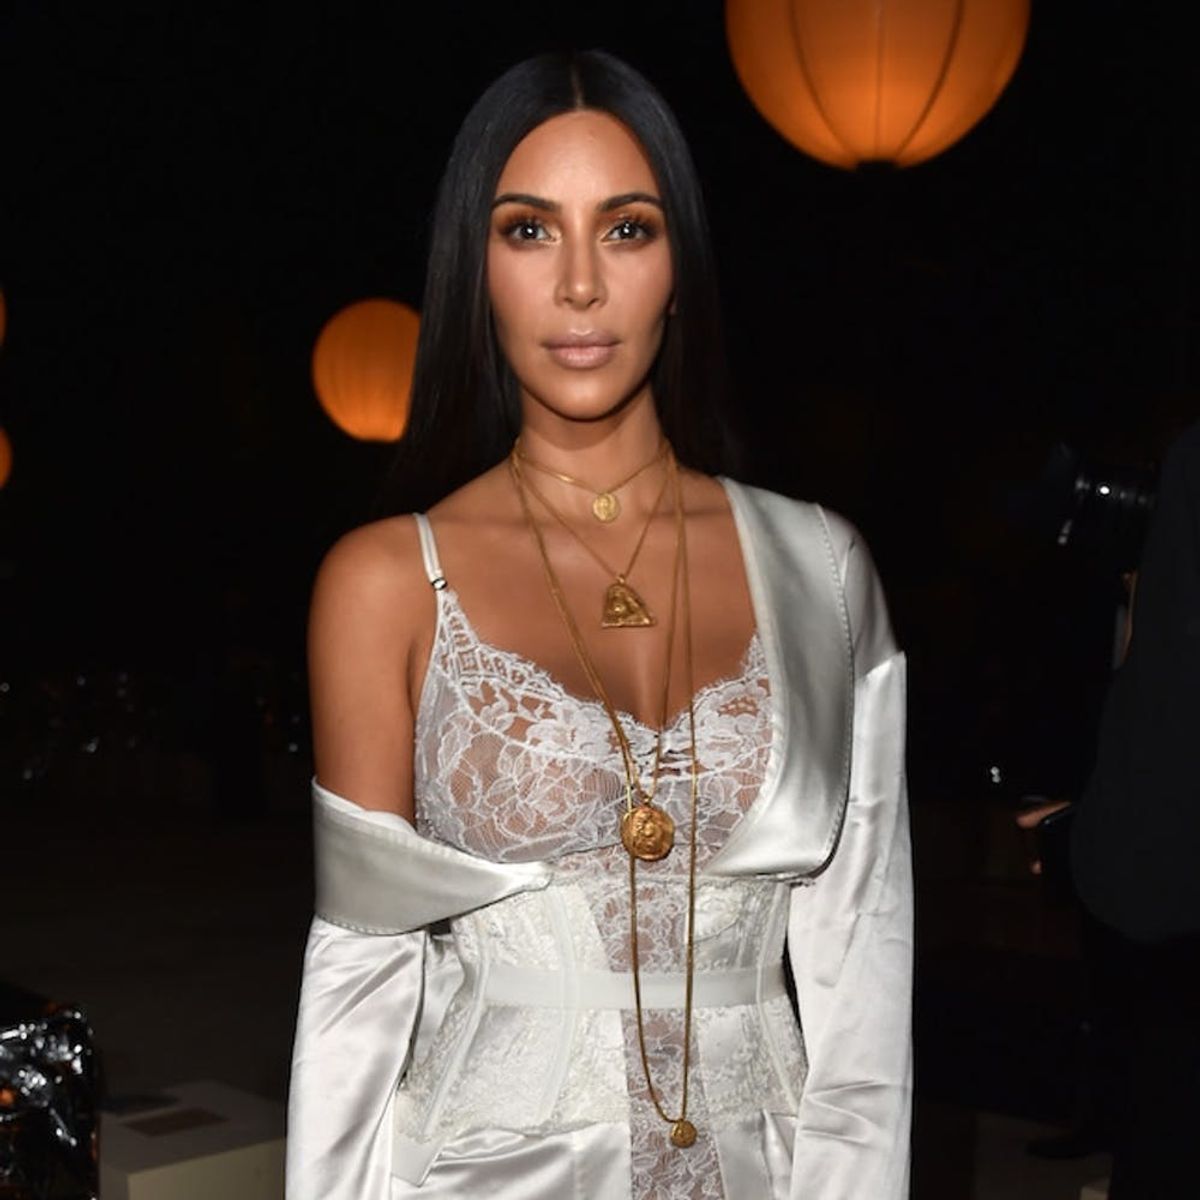 For Her Silver Screen Debut, Kim Kardashian Channeled a Sexy Yeti